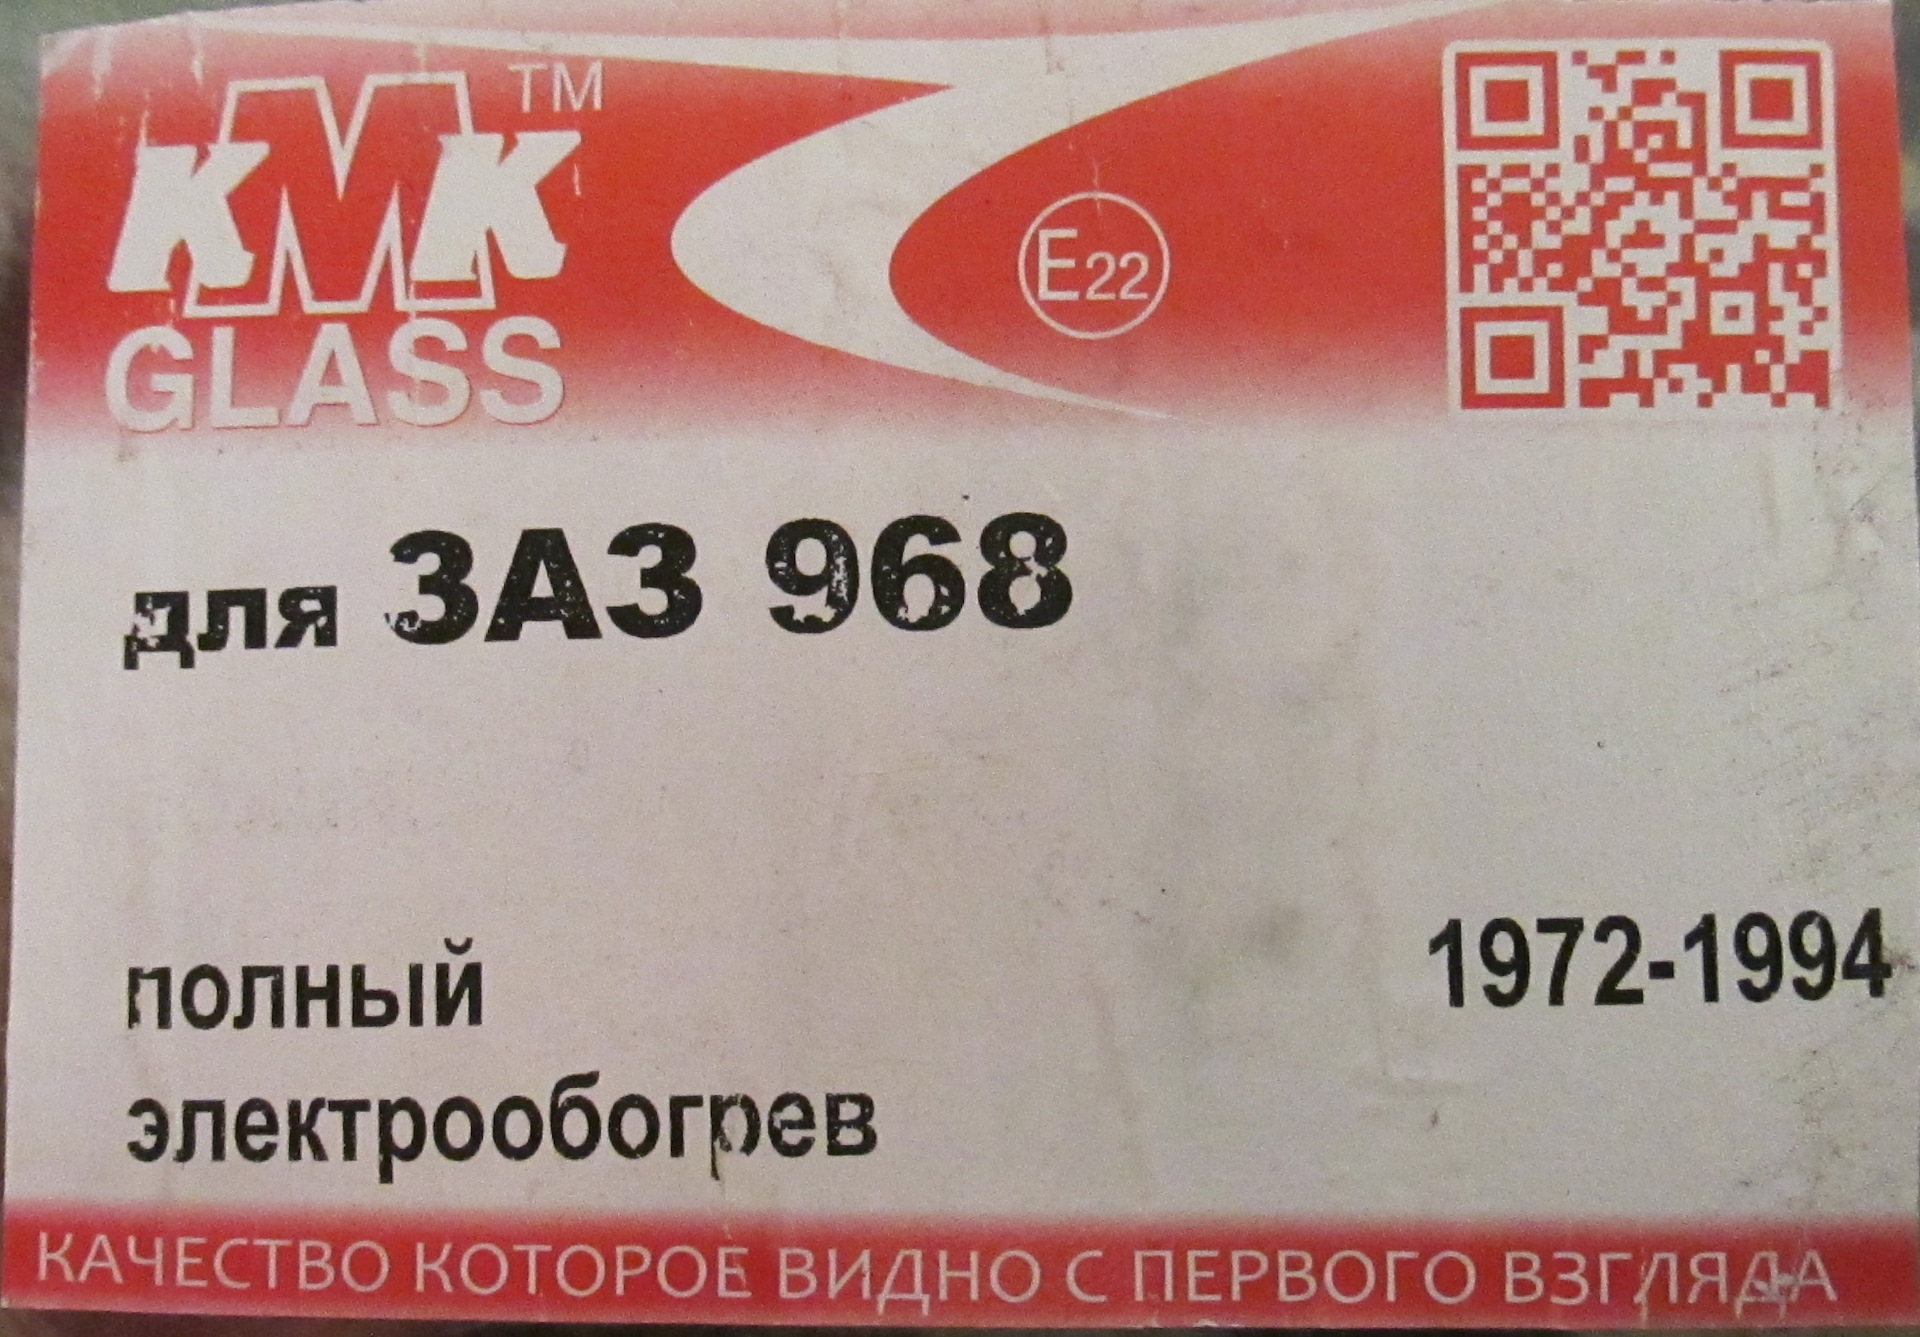 Производители стекла KMK. КМК Glass. KMK Glass Россия. KMK Glass 3014bclh.